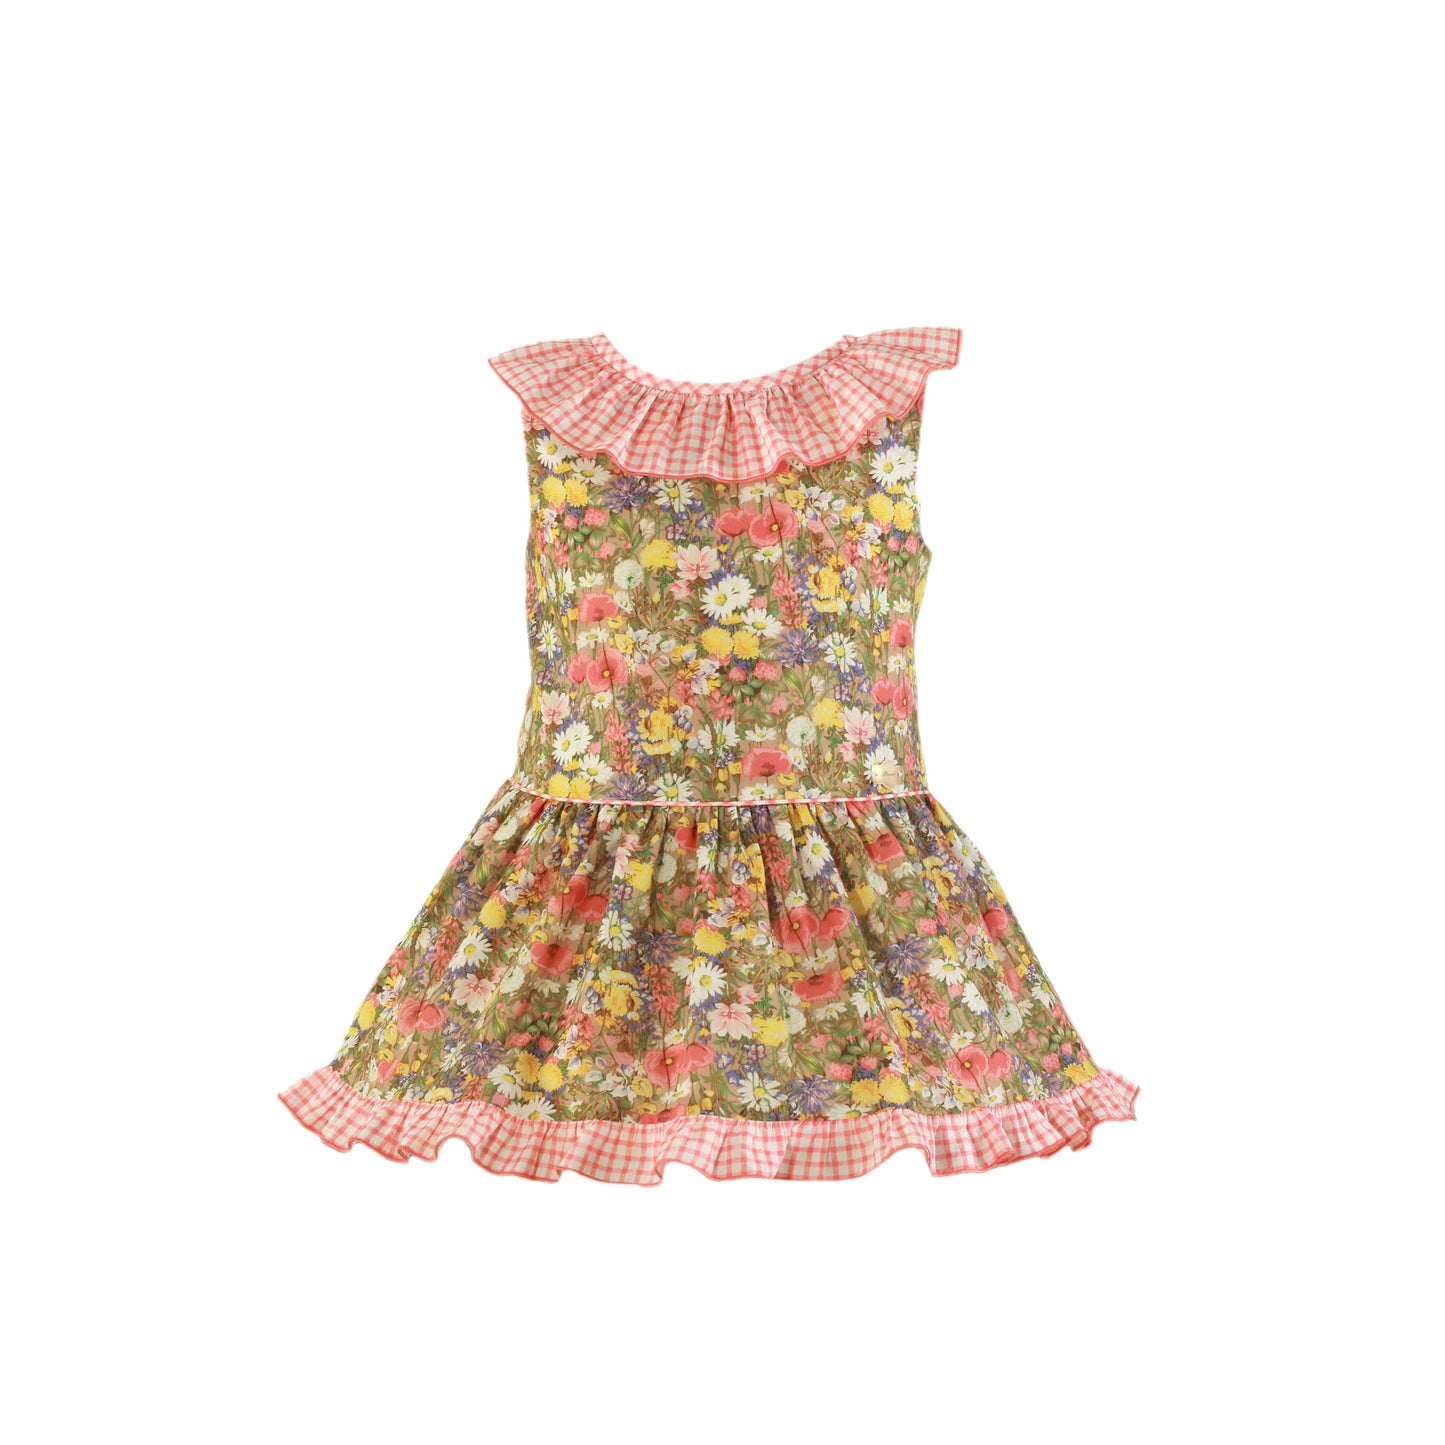 MIRANDA Coral Girls Floral Dress - 602